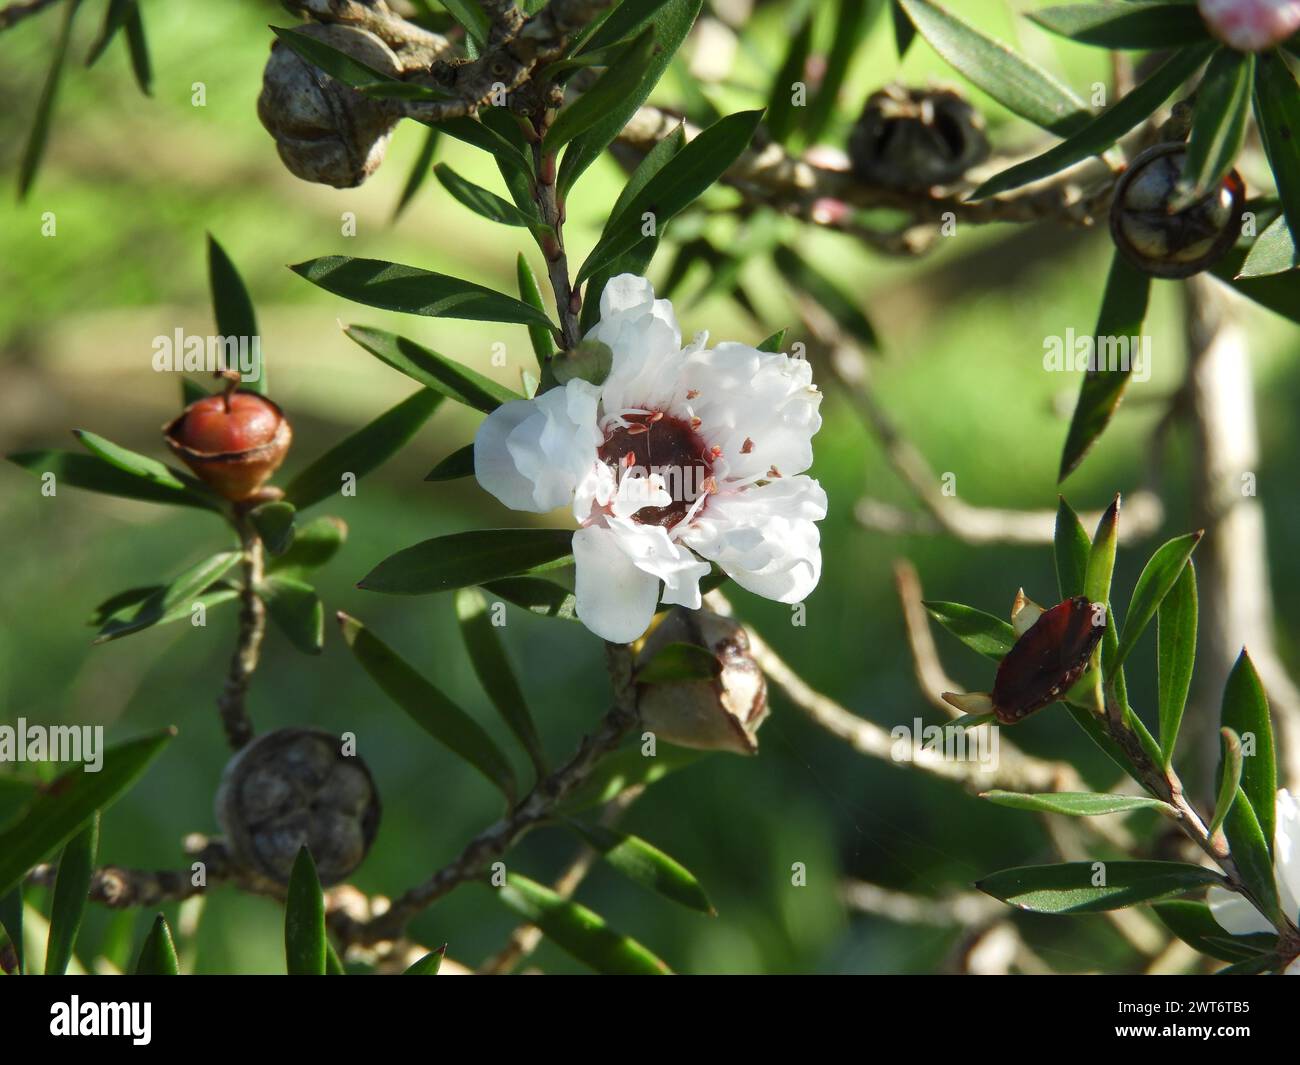 Manuka or leptospermum scoparium branch with beautiful white flower and capsule fruits. Stock Photo